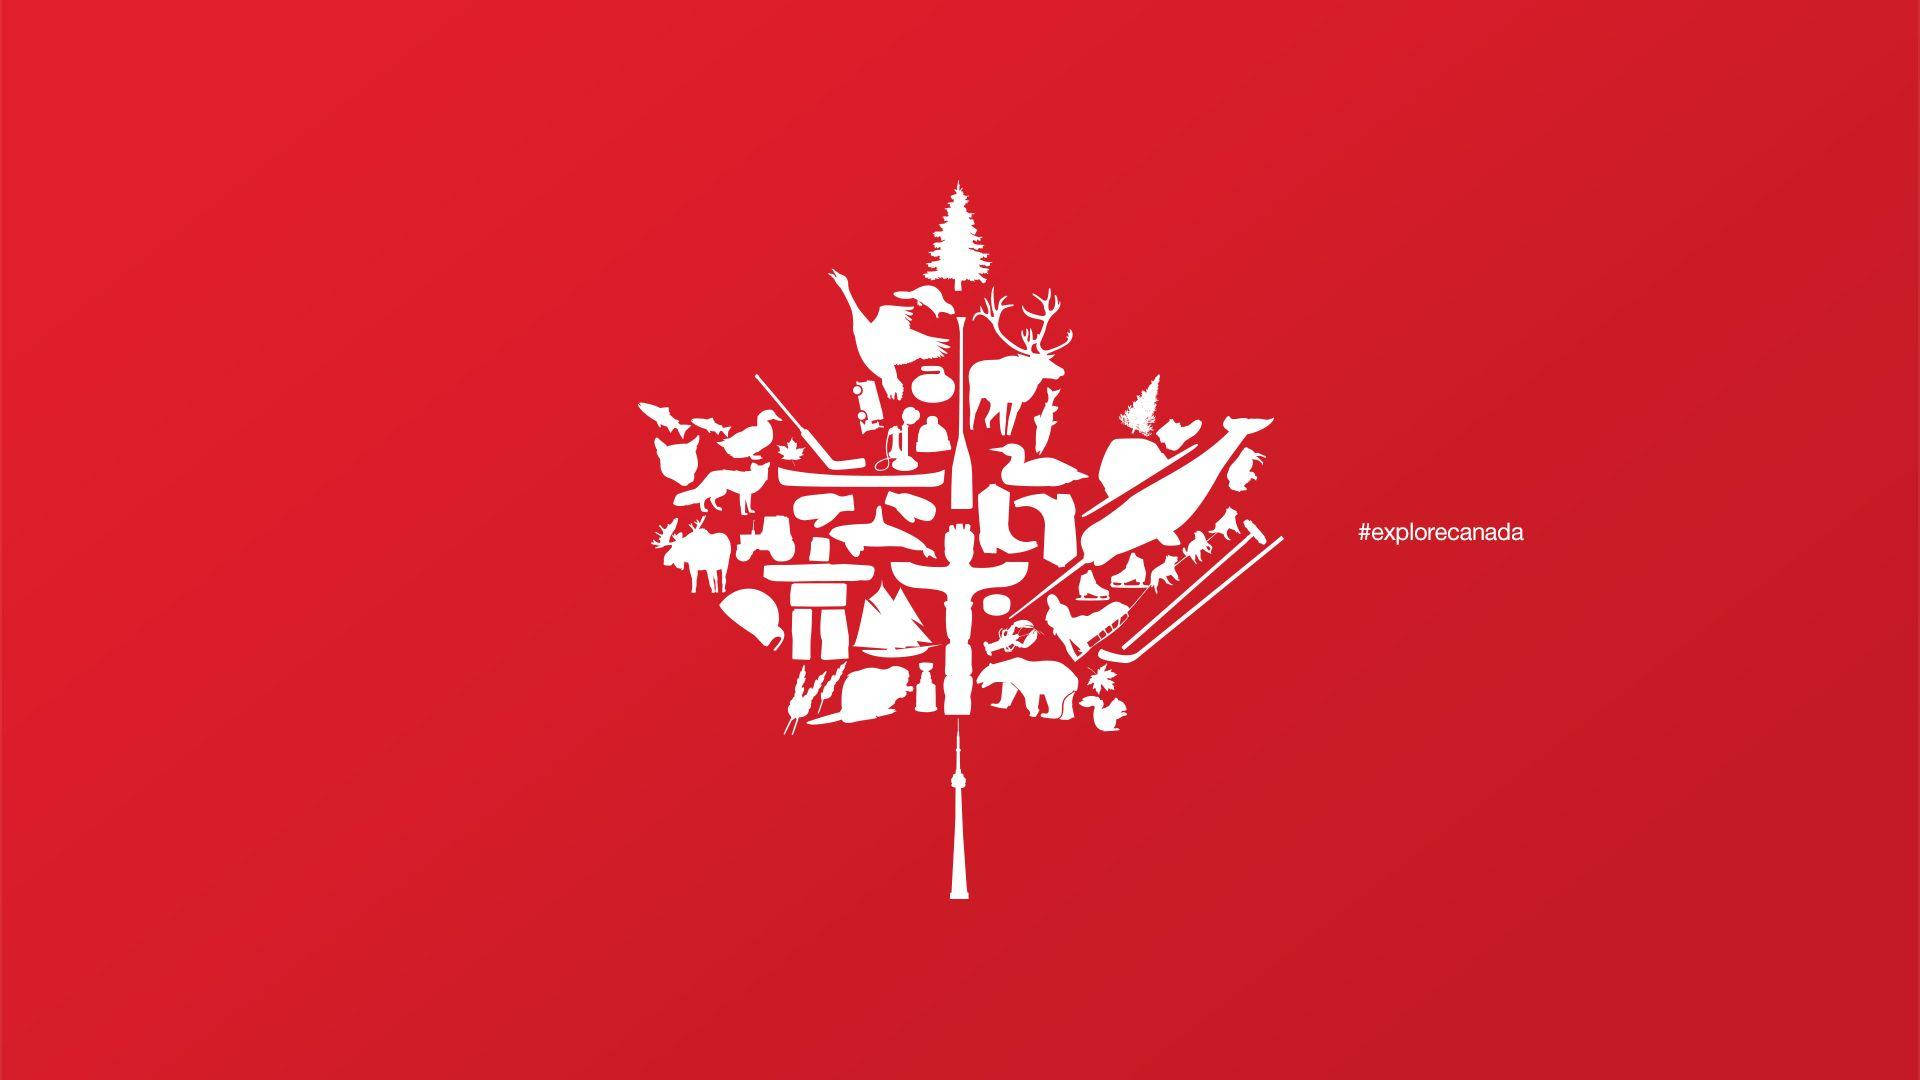 Kanadischernationalfeiertag Logo In Rot Wallpaper